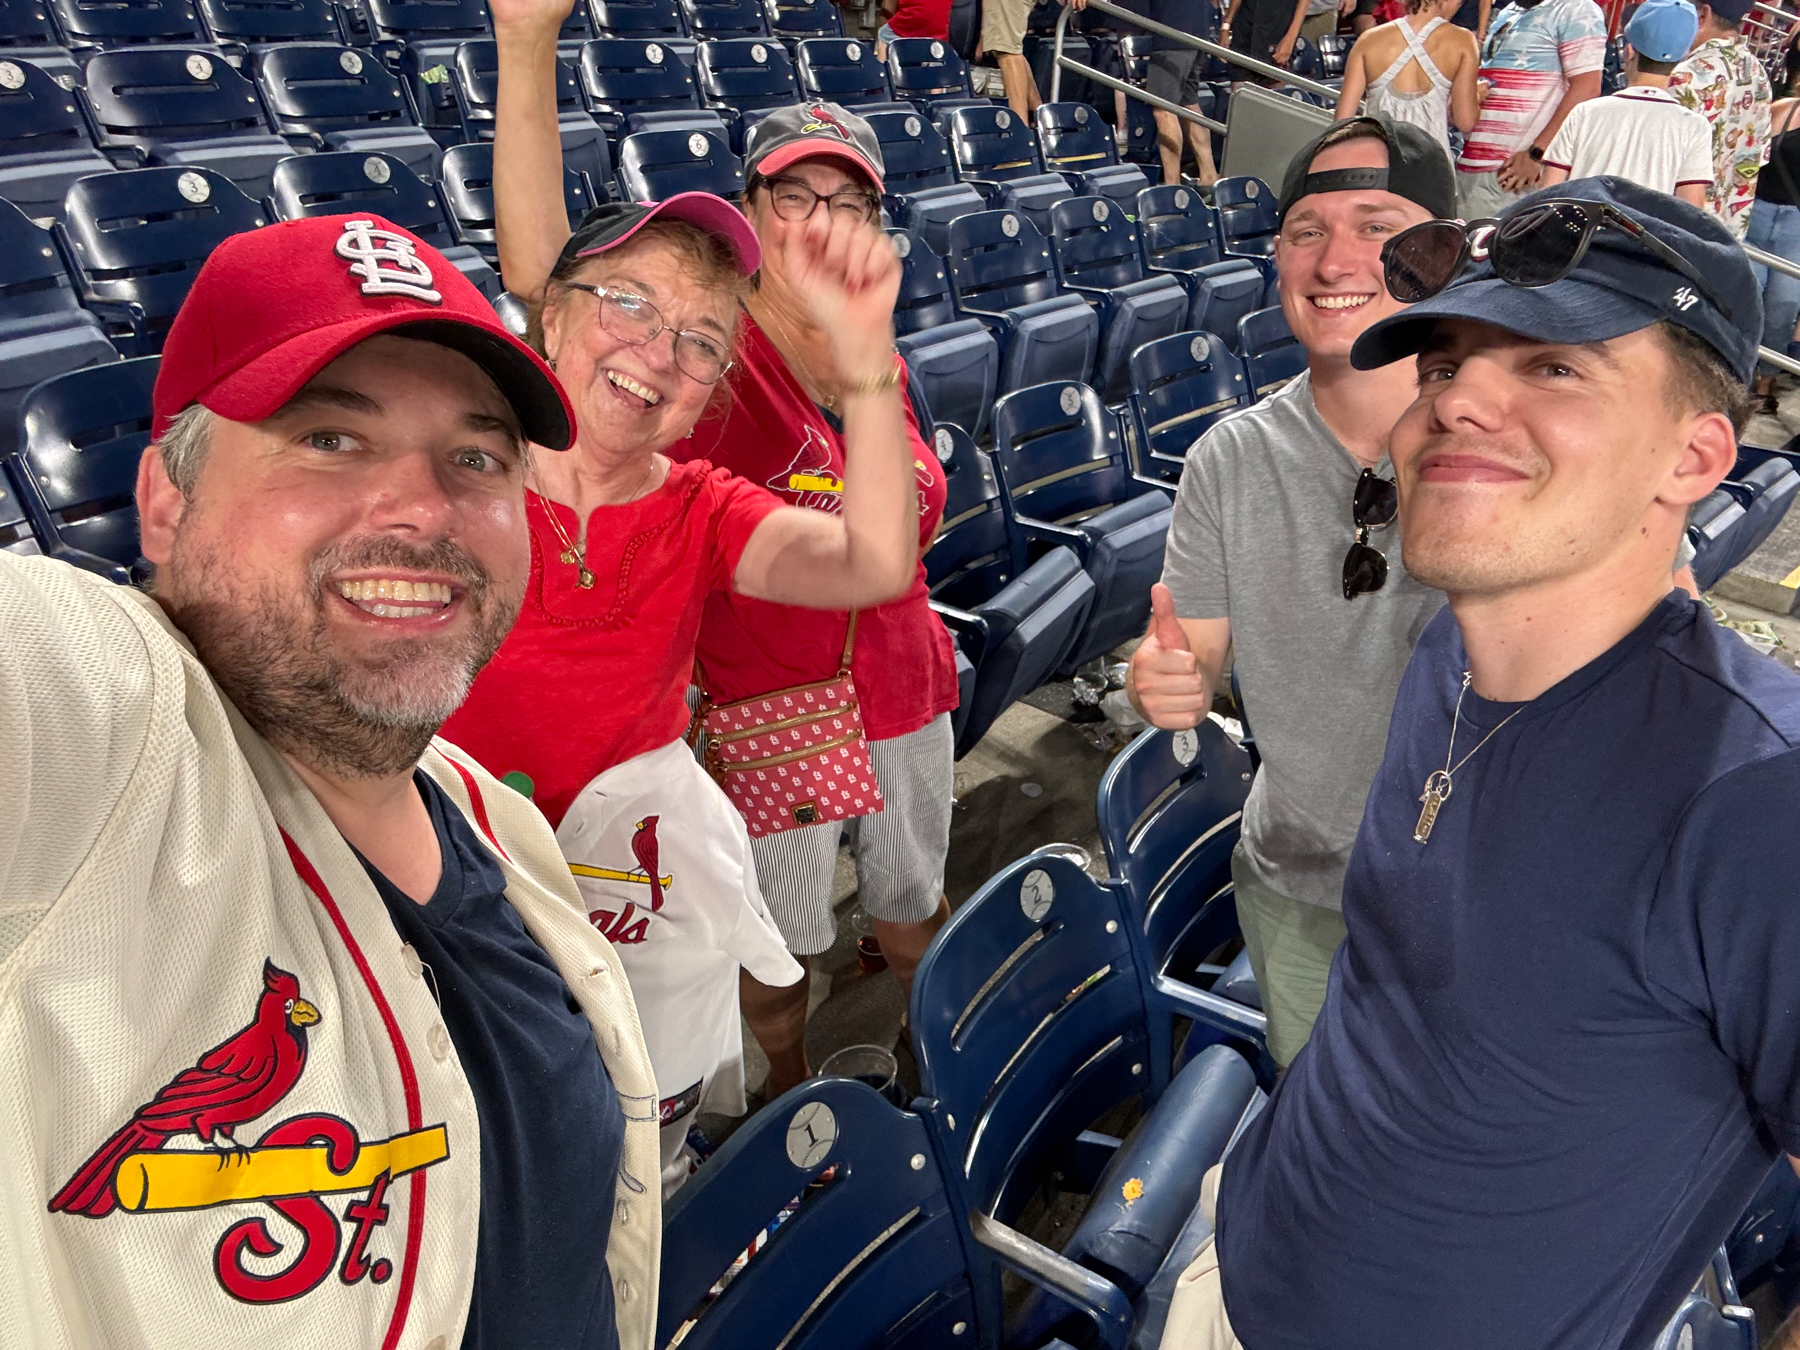 Five Cardinals fans celebrating a win!